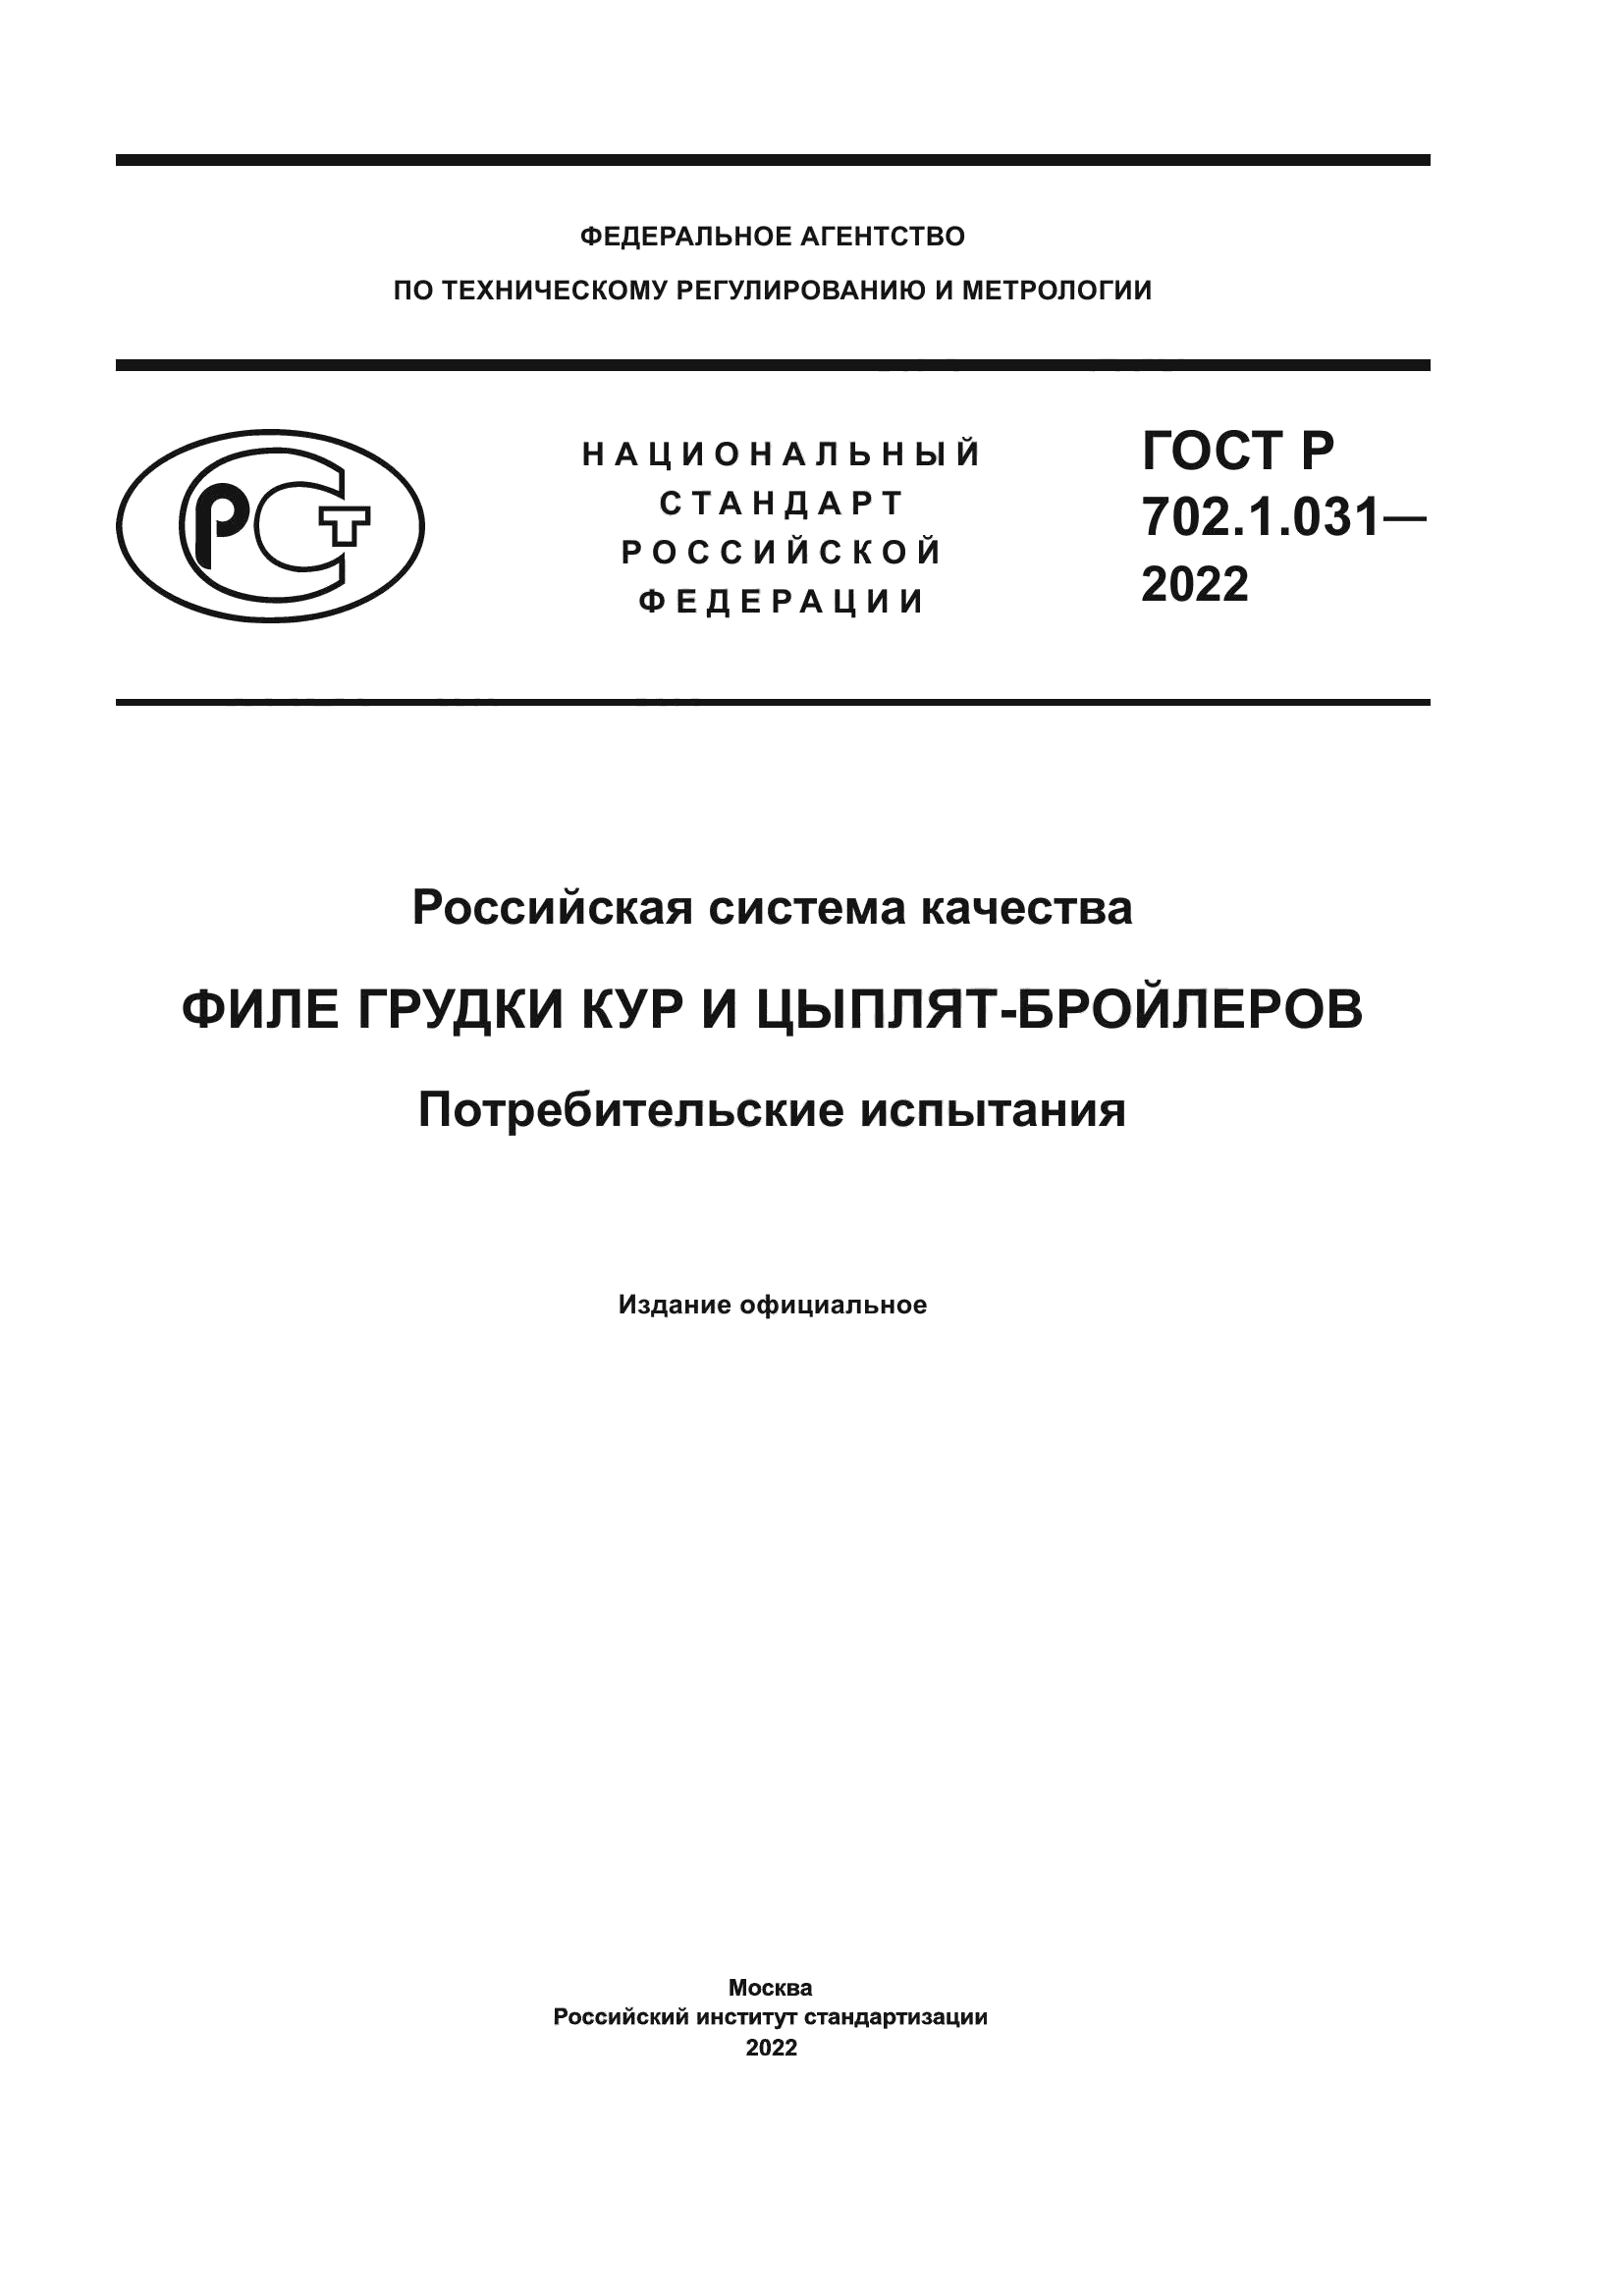 ГОСТ Р 702.1.031-2022